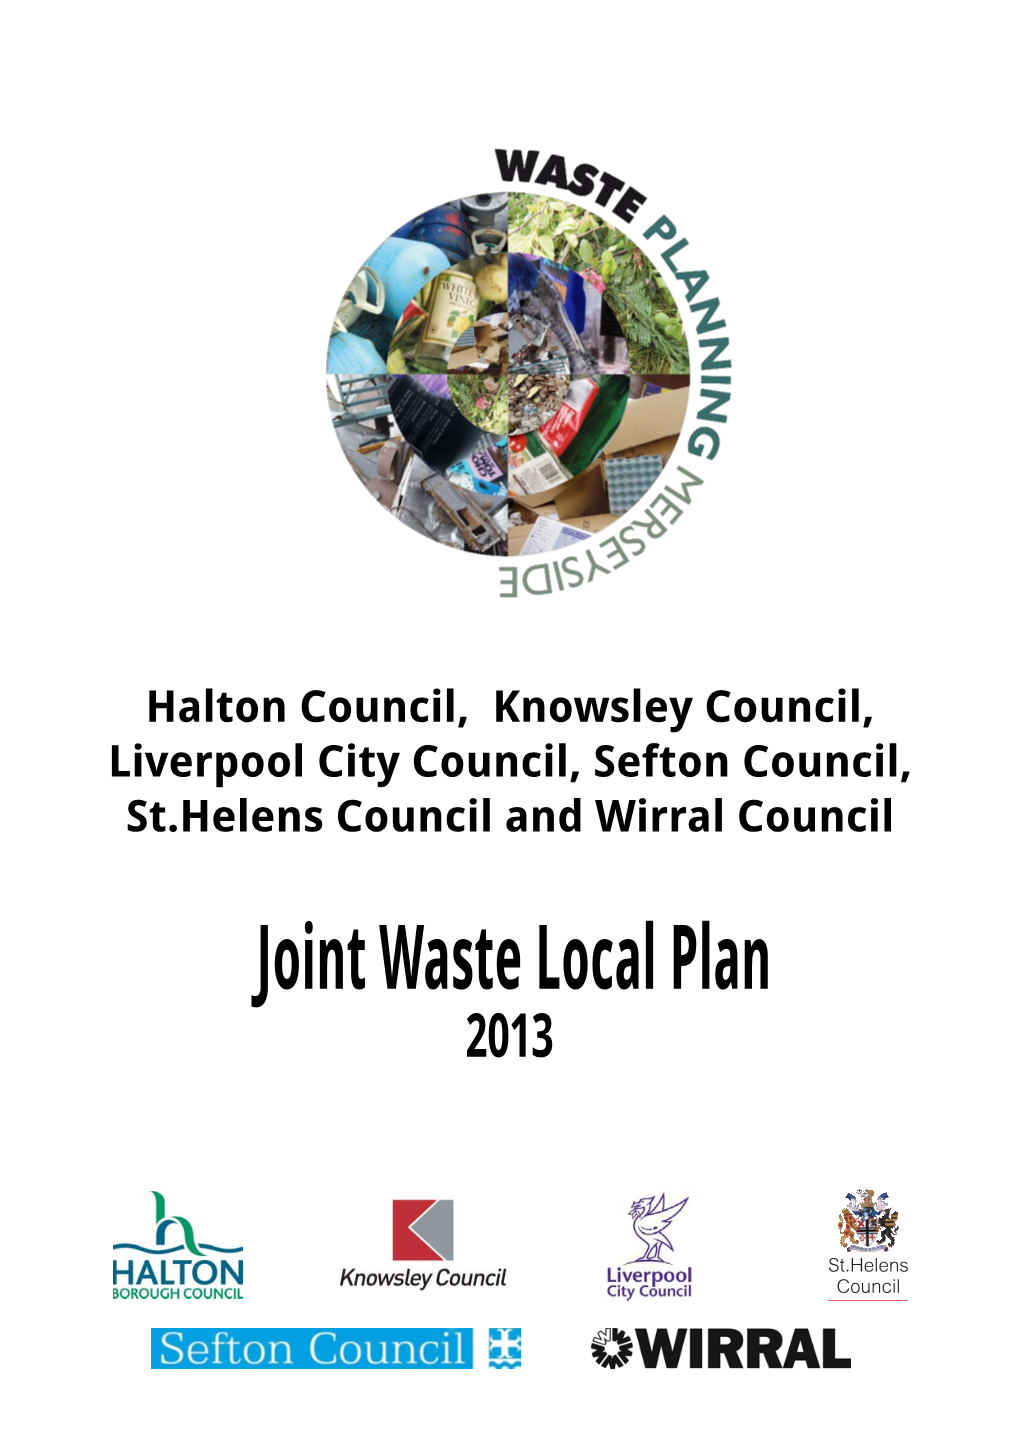 Waste Local Plan 2013